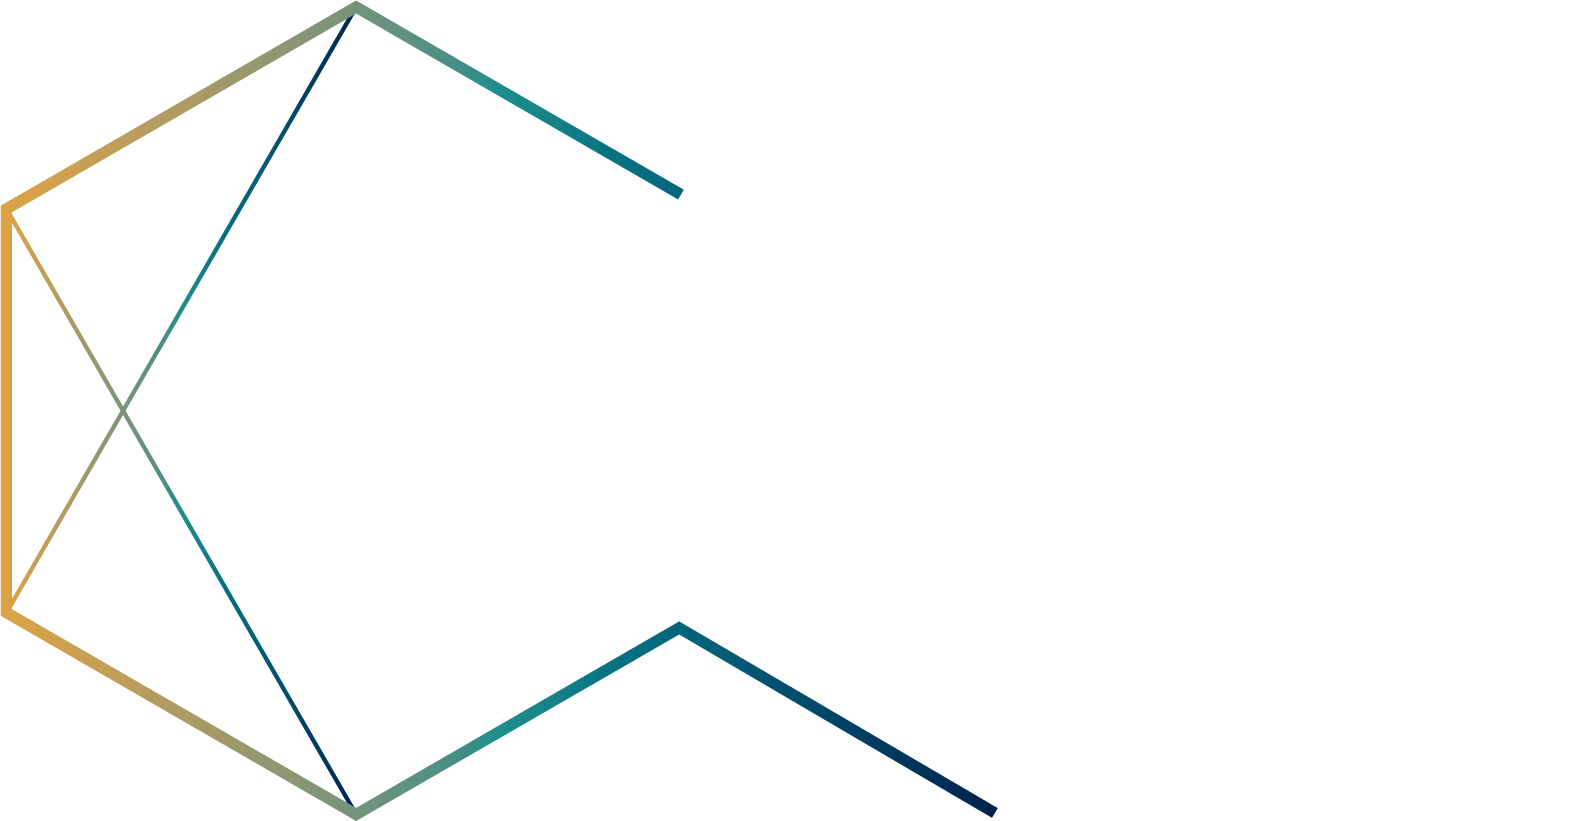 6 Degree Intelligence